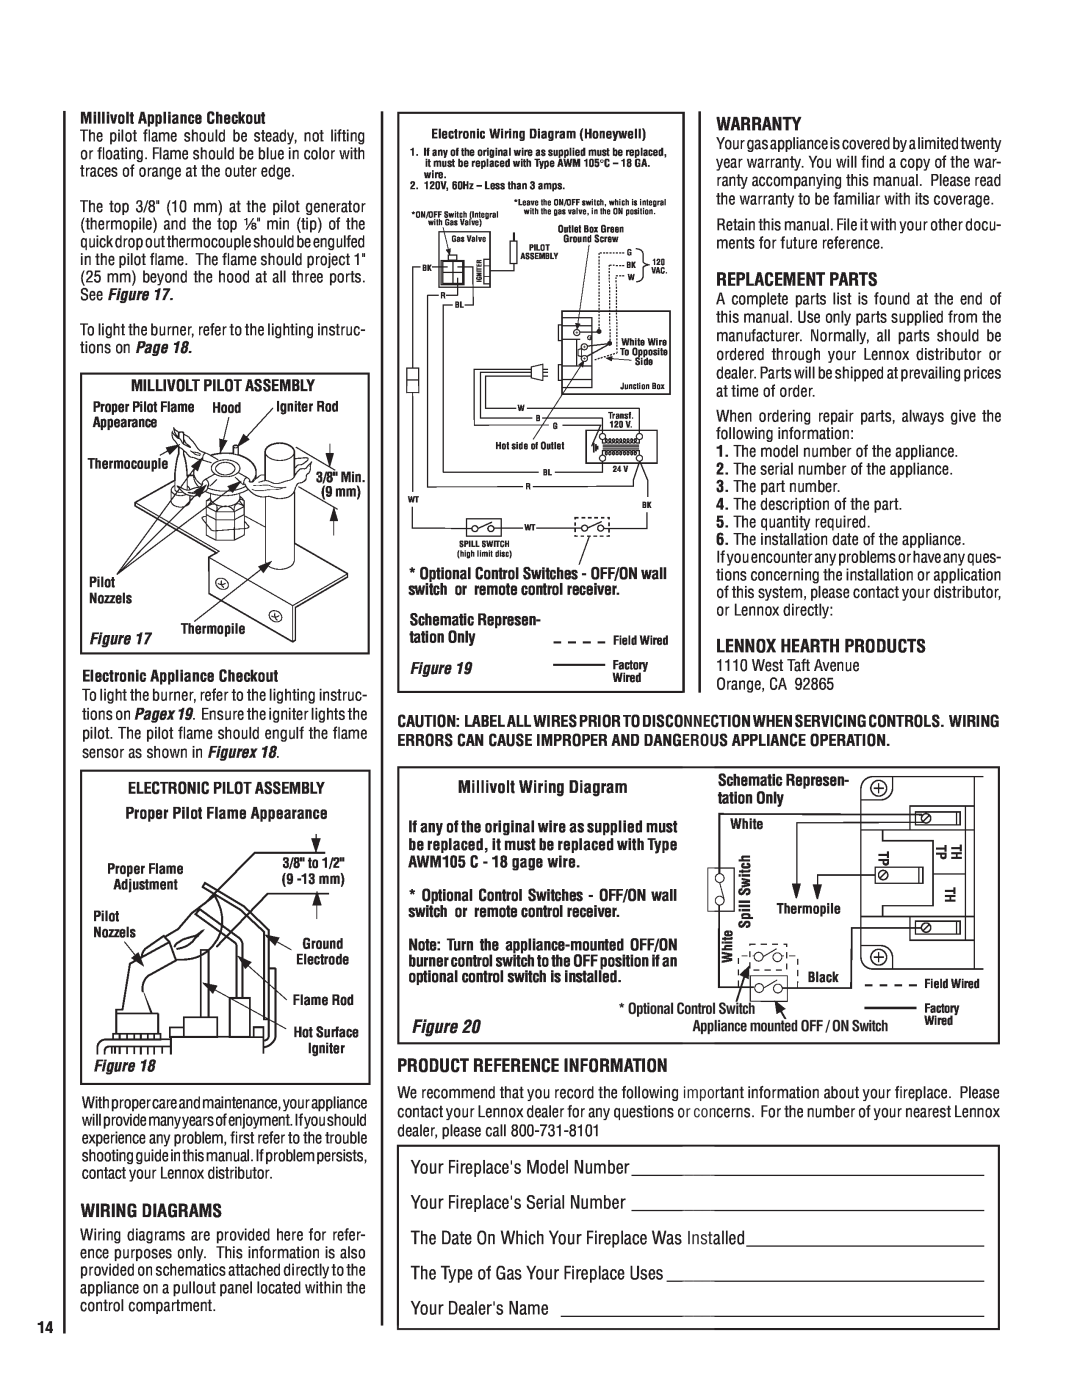 Lennox International Inc MPB35ST-NM manual Warranty, Replacement Parts, Lennox Hearth Products, Millivolt Wiring Diagram 